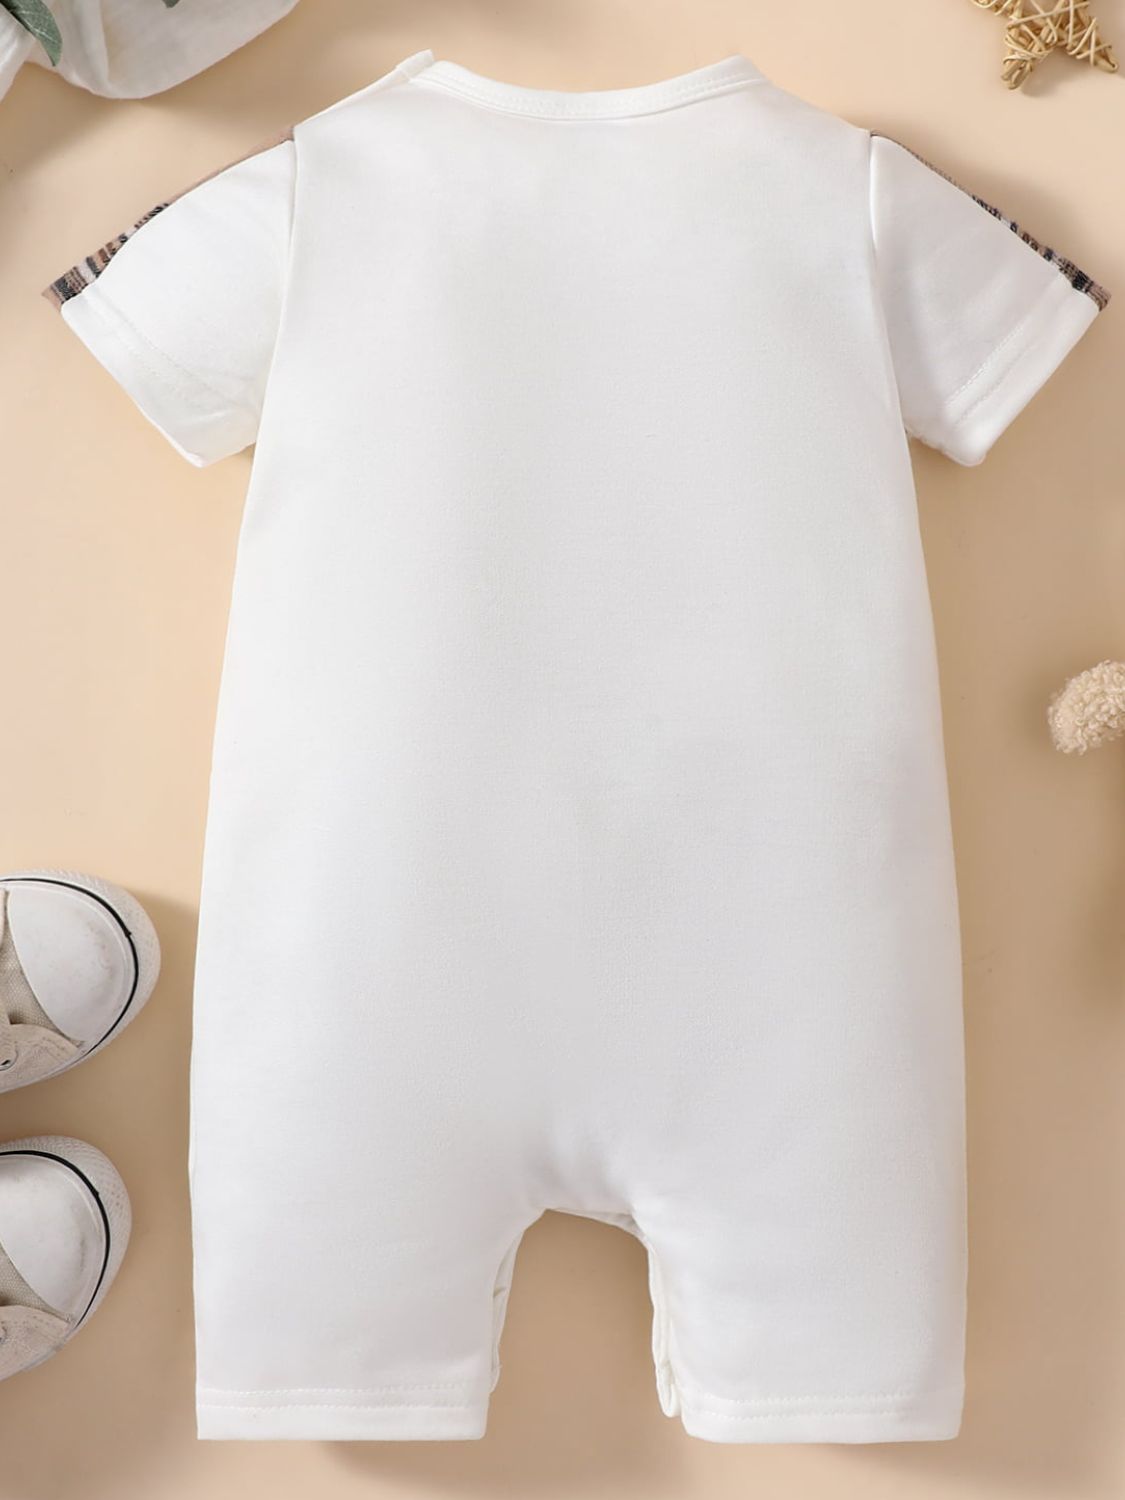 Baby MINI BOSS Bear Graphic Short Sleeve Jumpsuit - Fashion Quality Boutik